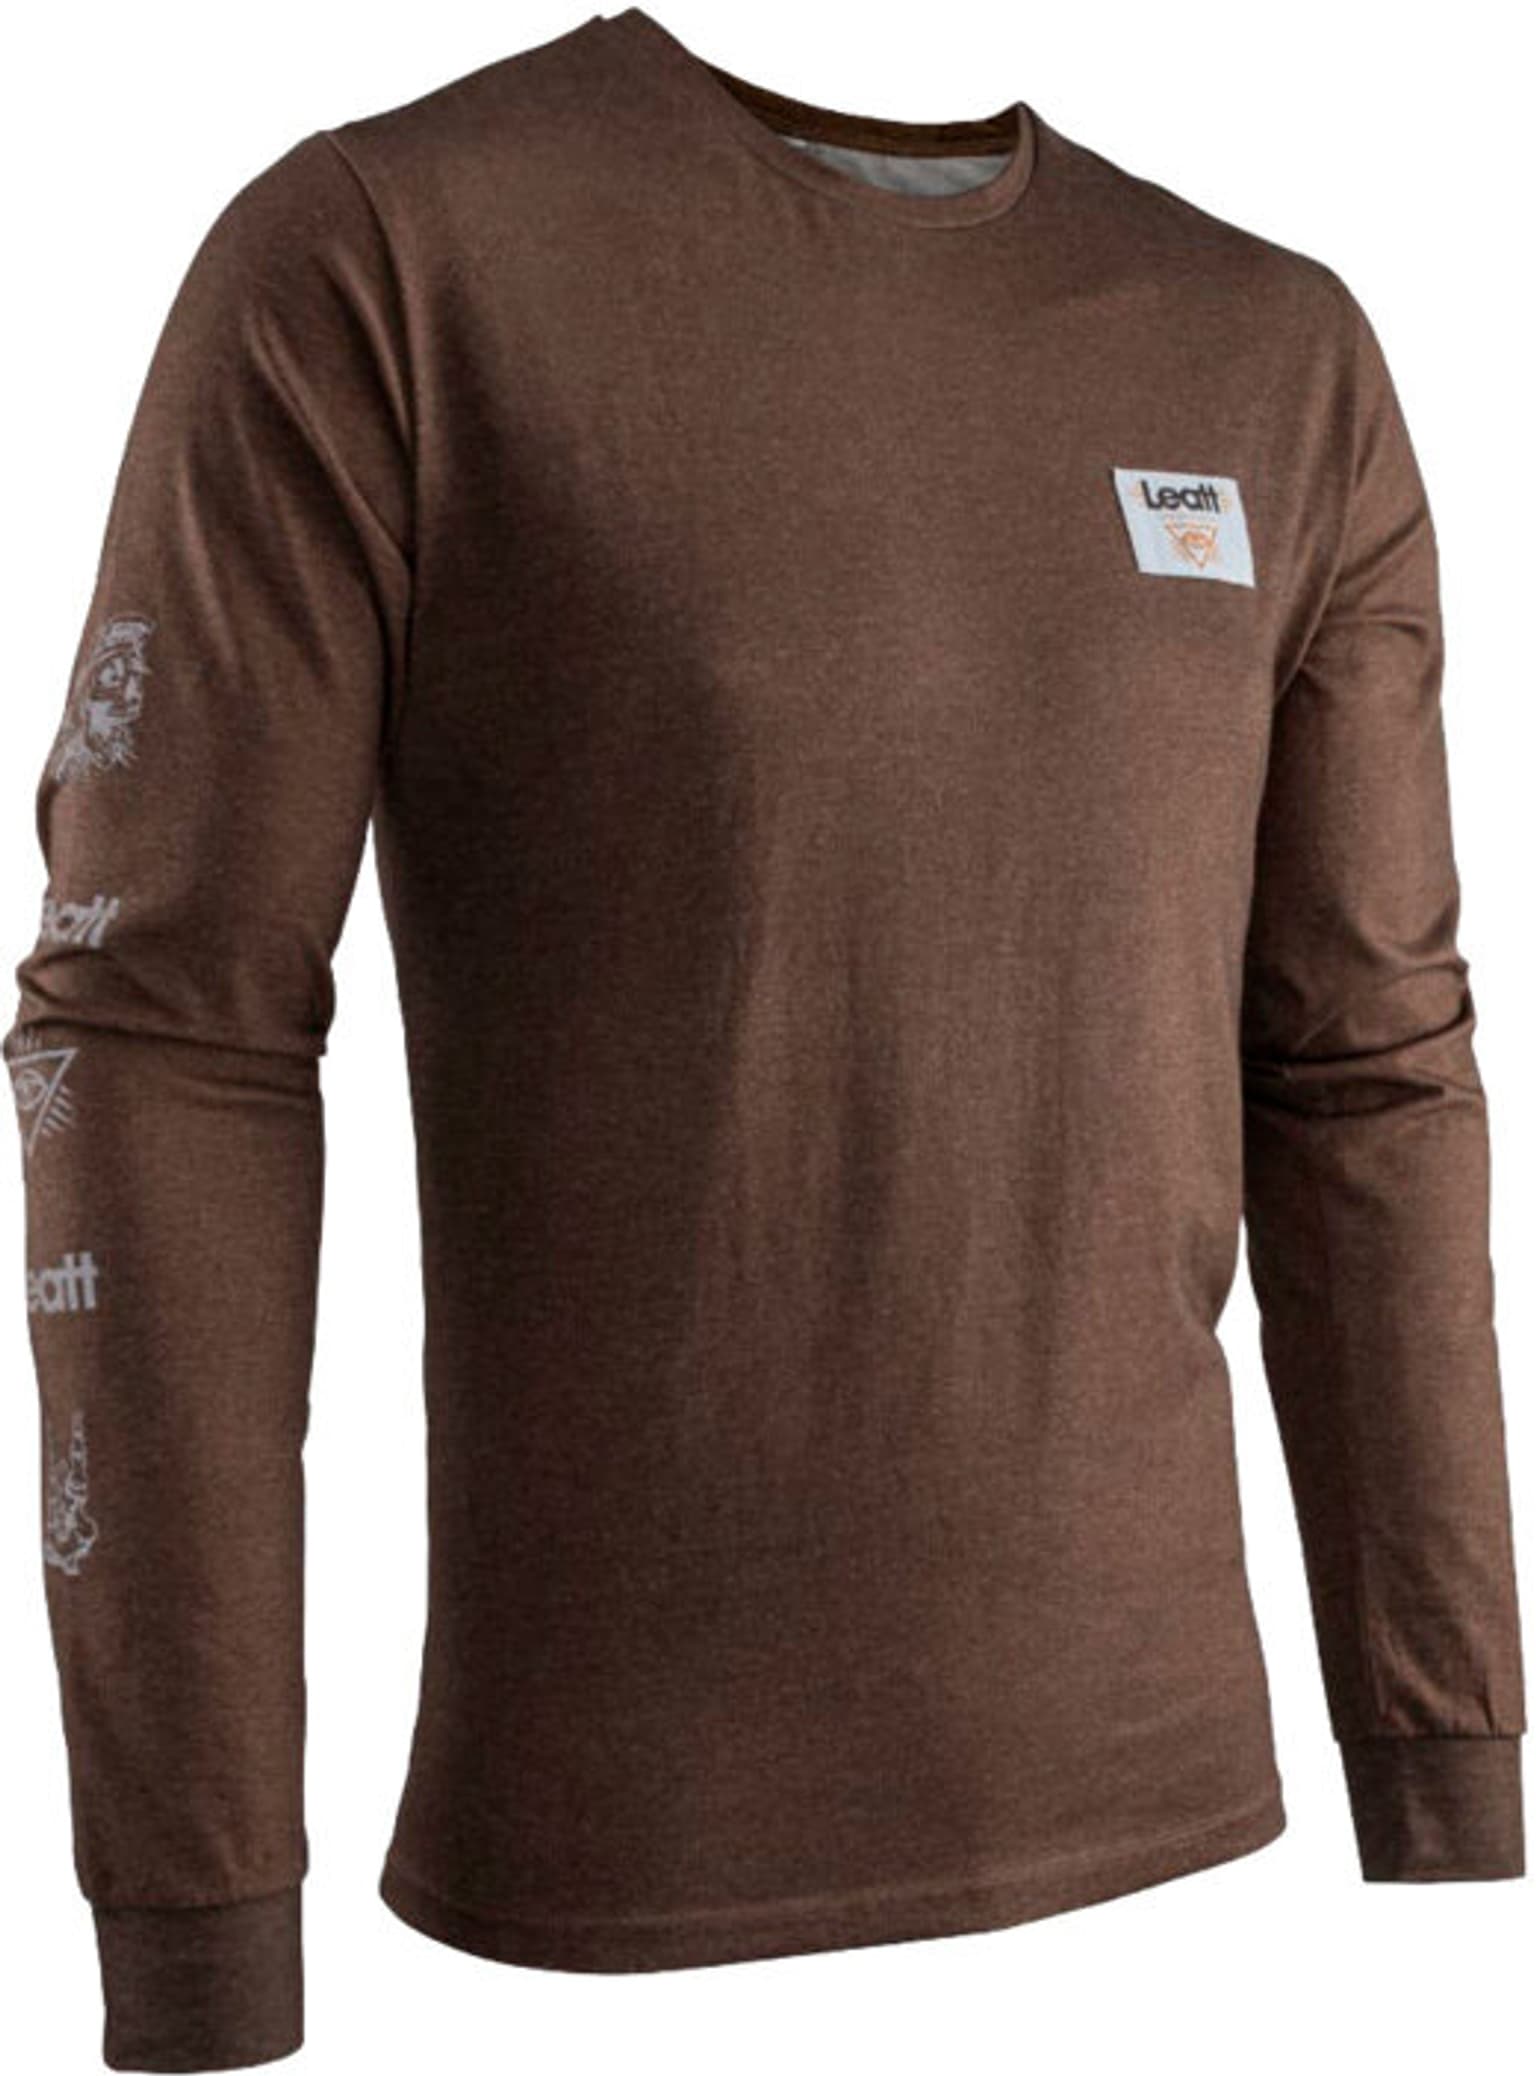 Leatt Leatt Core Long Shirt Maglia a maniche lunghe marrone 1